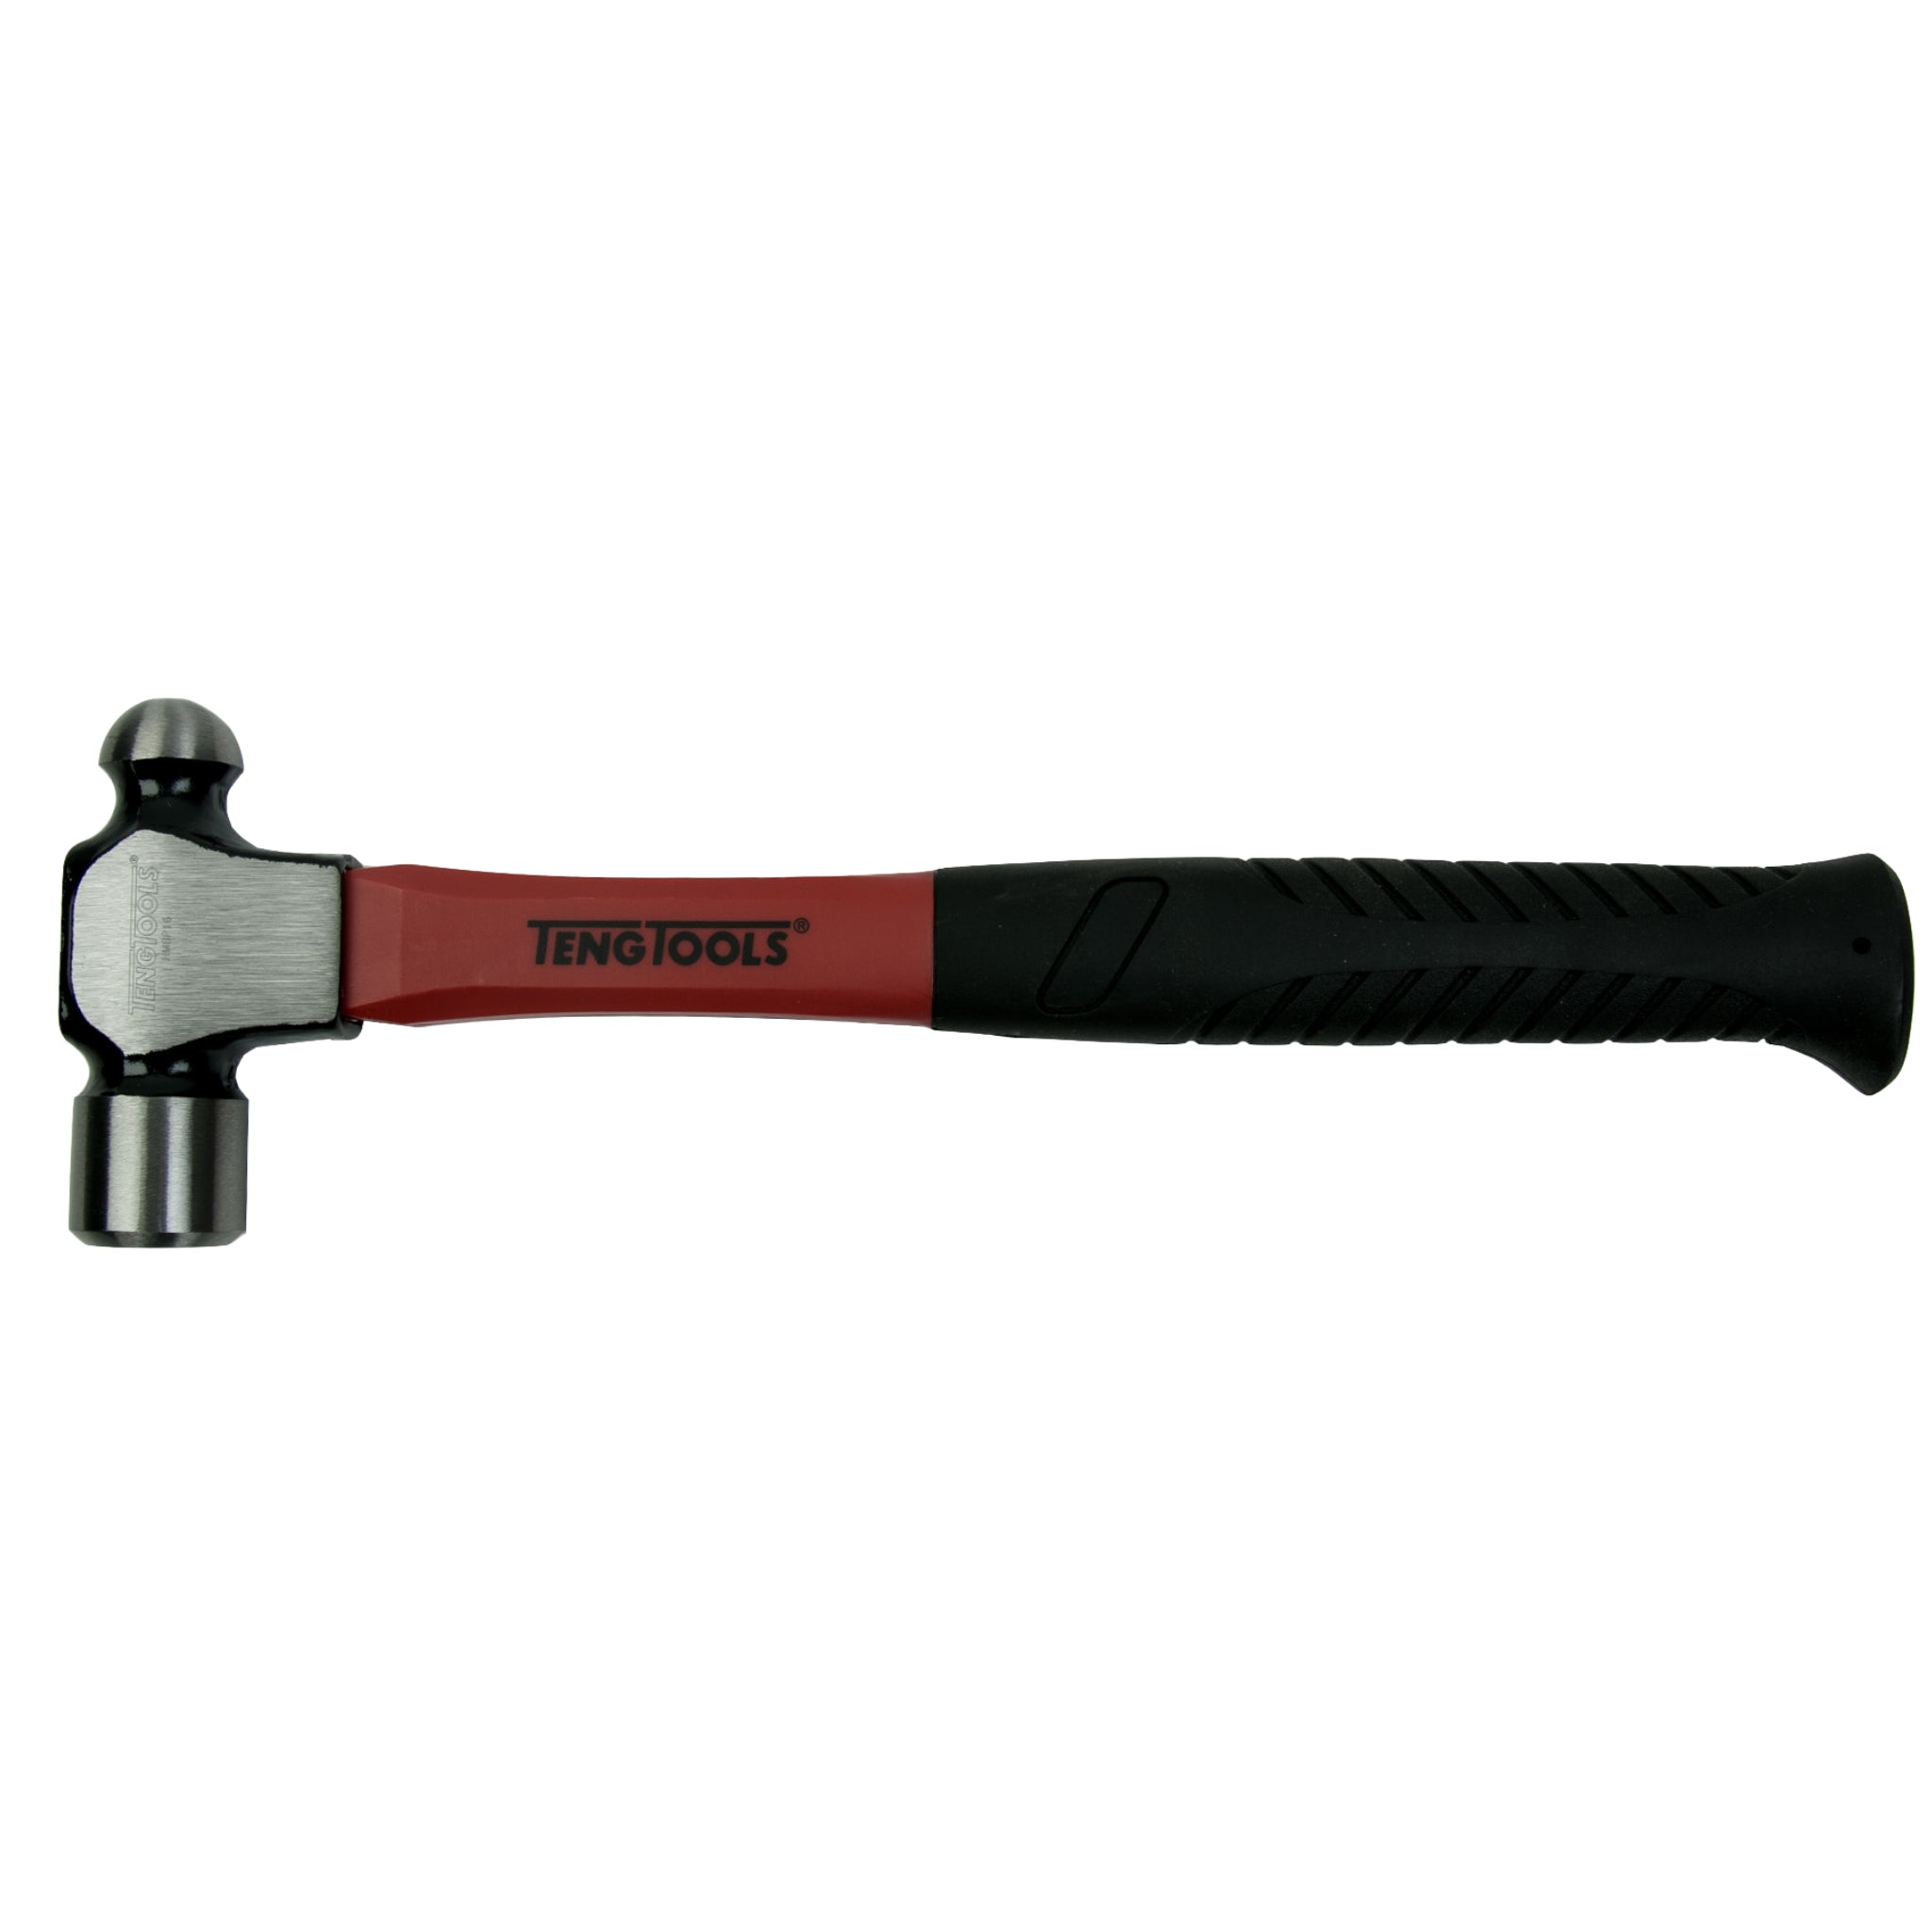 Teng Tools Ball Pein Hammer Range 12, 16, 24 and 32 Ounce (Oz) Hammers